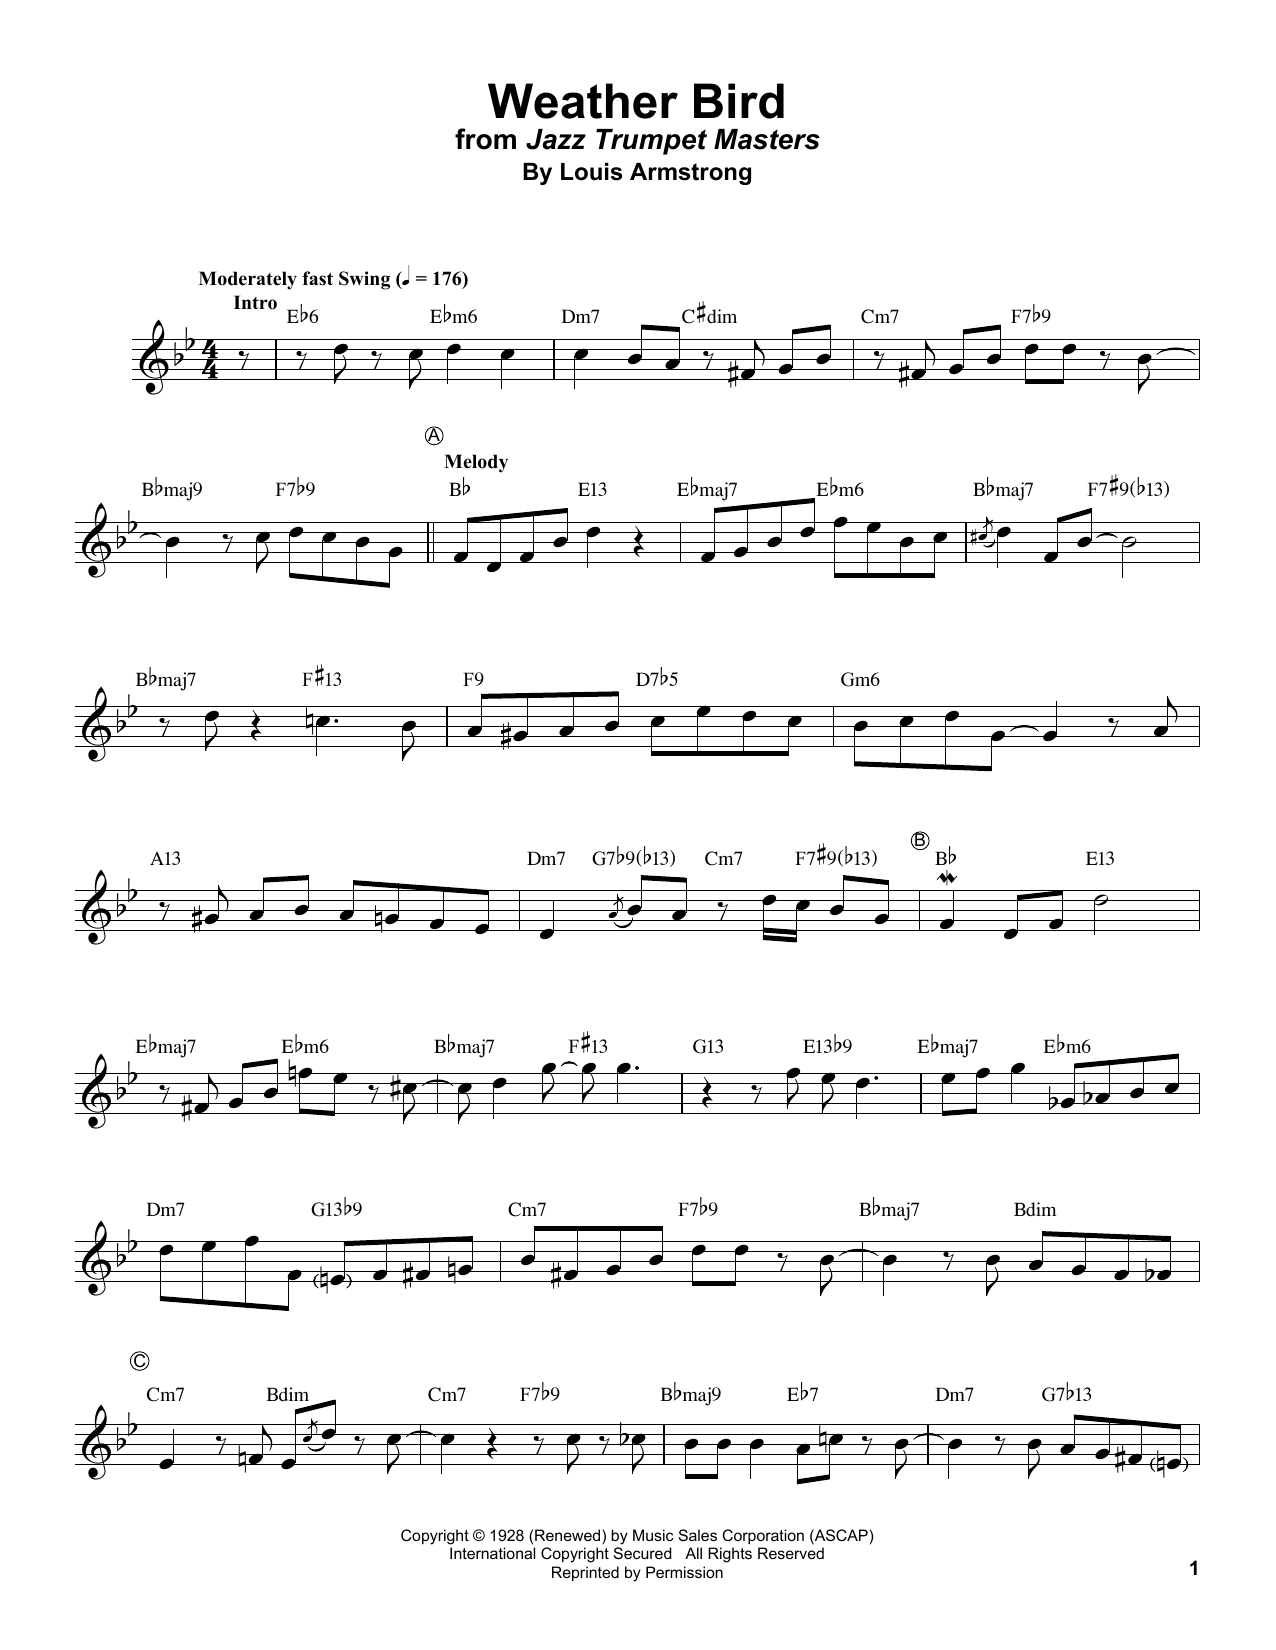 Nicolas Payton Weather Bird Sheet Music Notes & Chords for Trumpet Transcription - Download or Print PDF